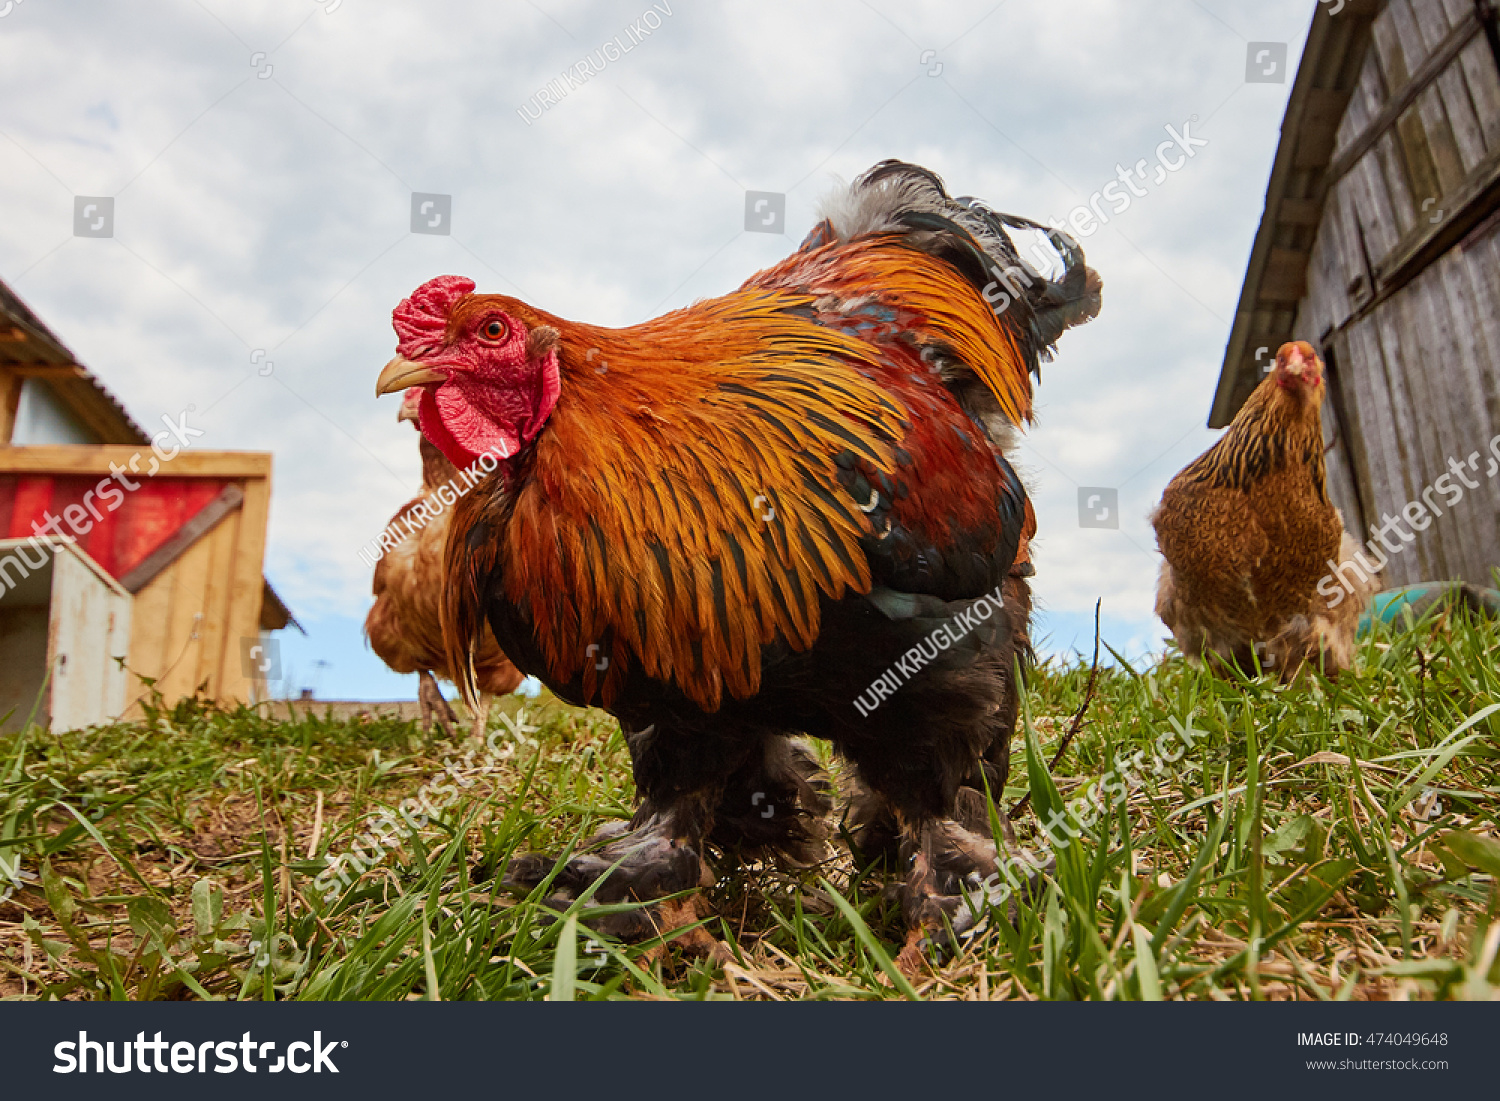 Curious cock on the home farm, birds close-up. #474049648